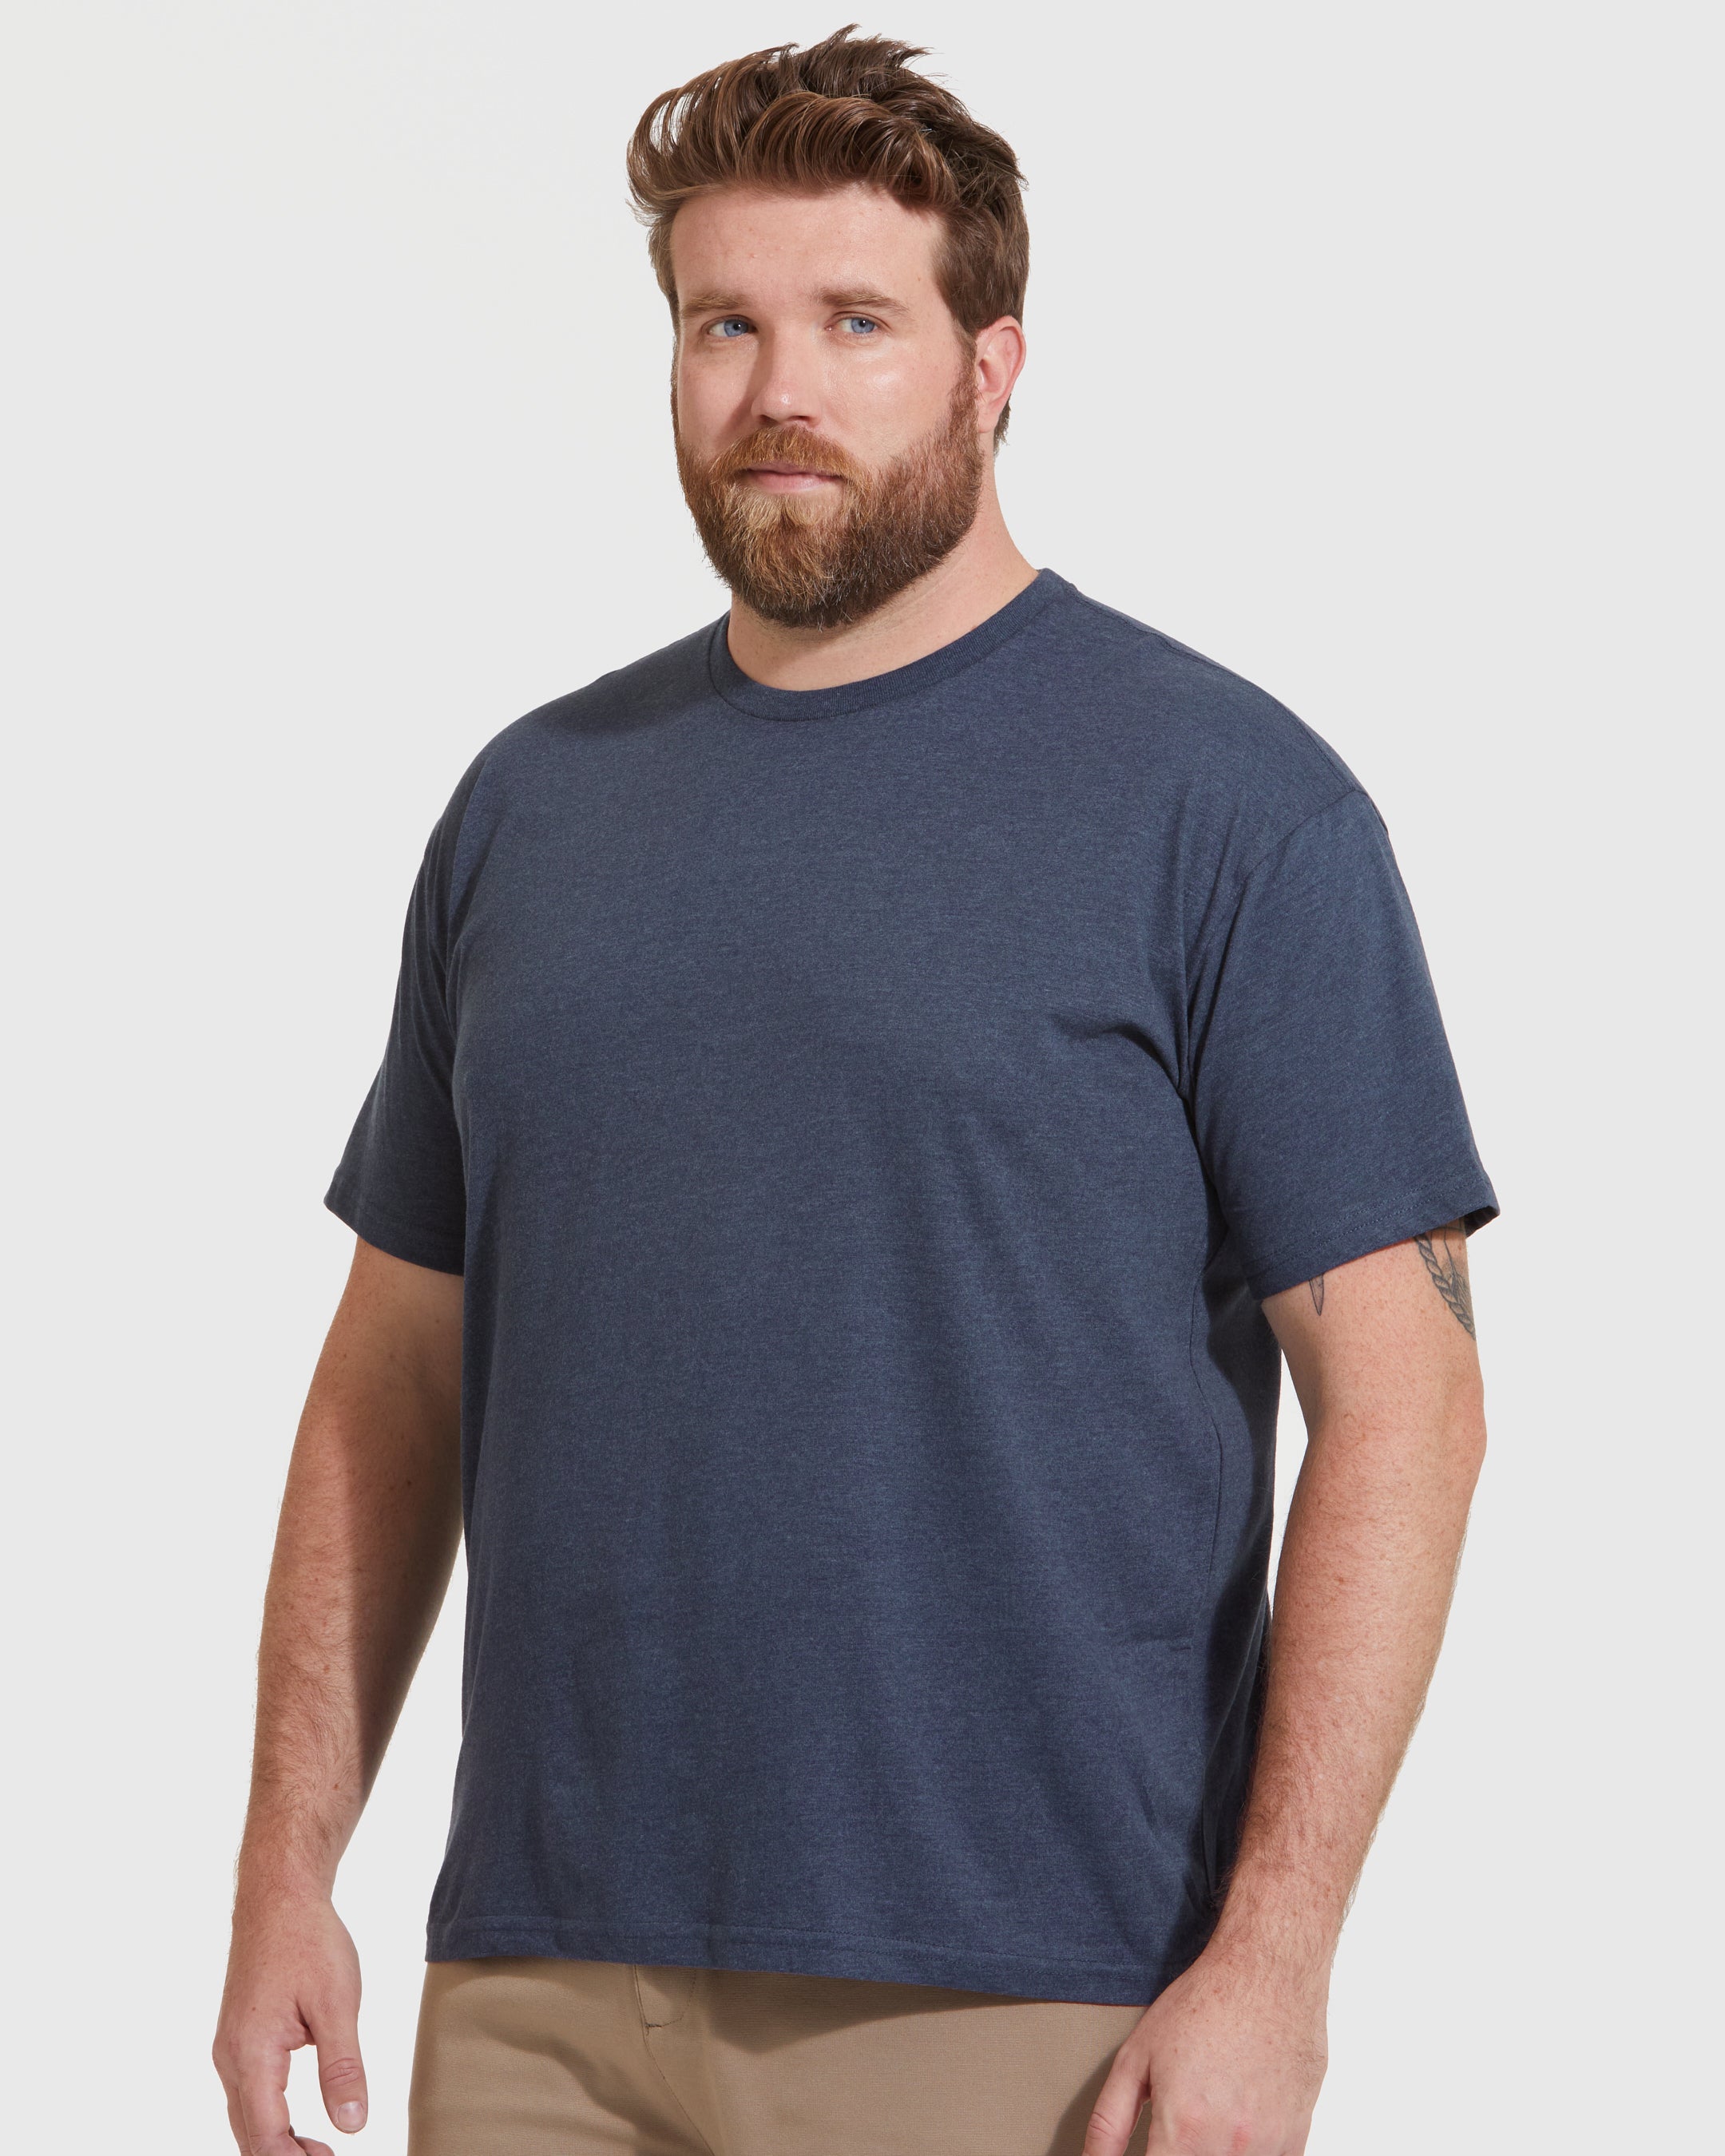 Heather Blue - Crew Navy Men\'s Neck Classic T-Shirt True